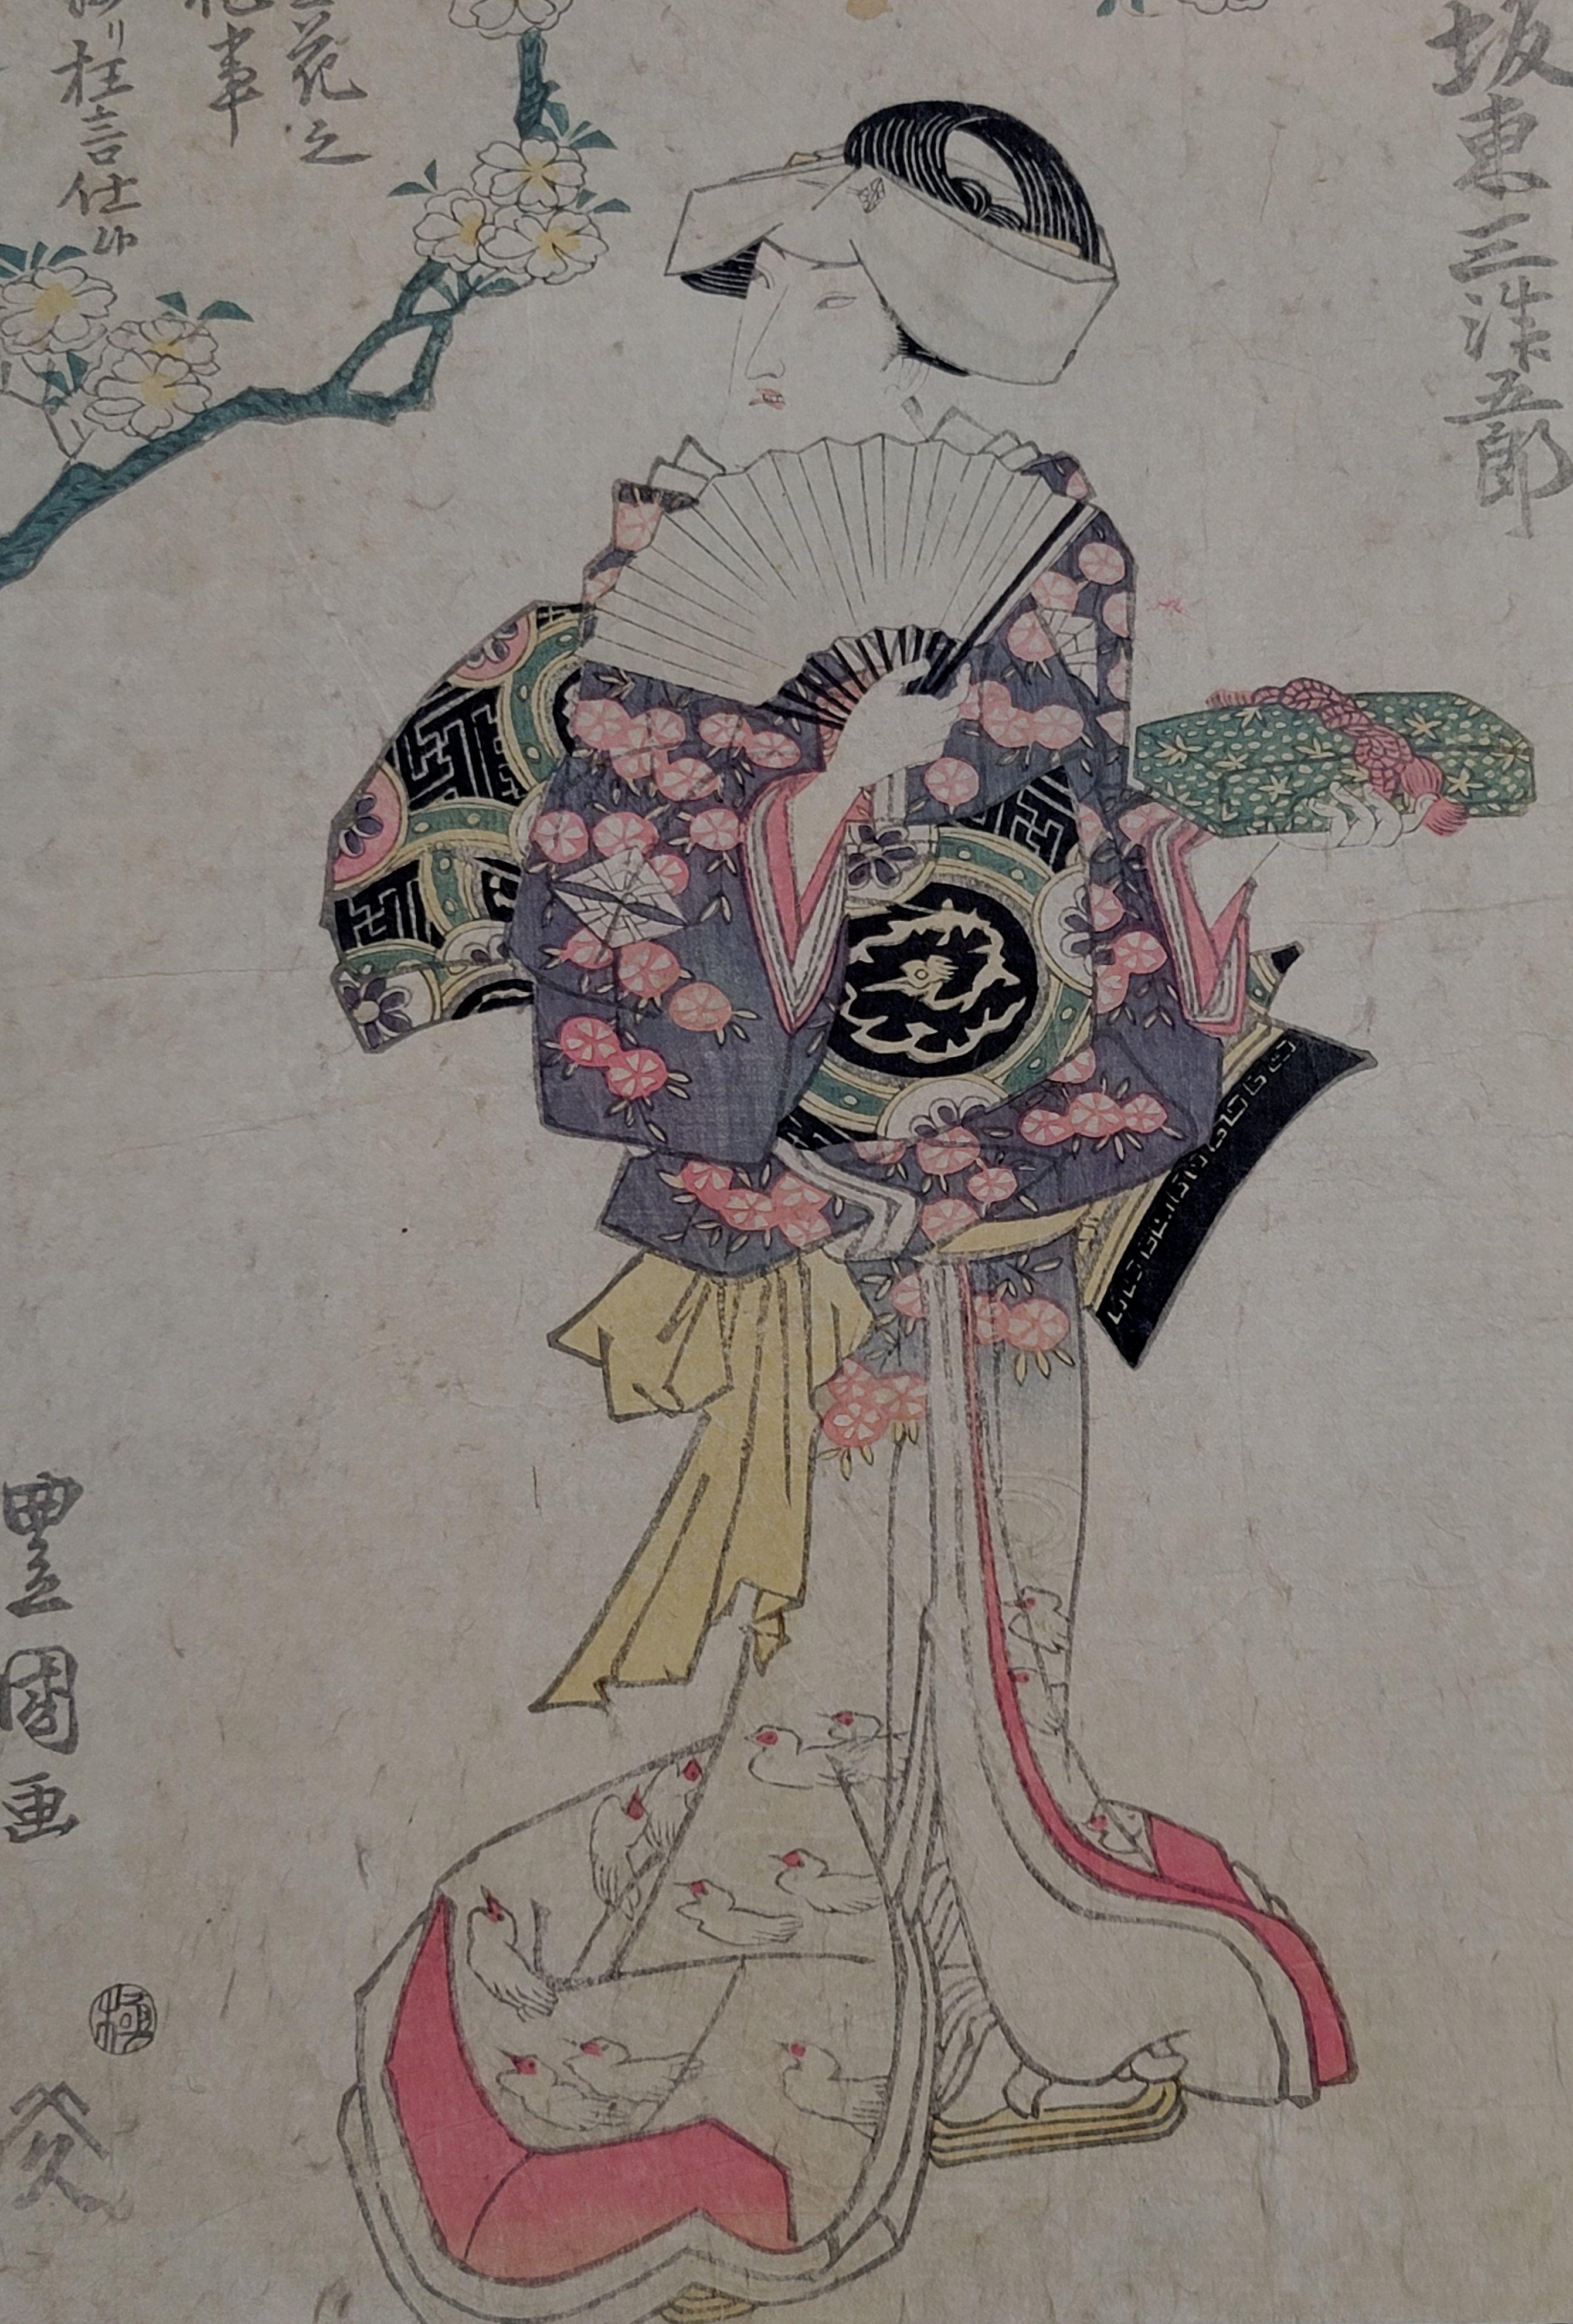 Japanese Woodblock Print by Utagawa Toyokuni I (1769~1852), original and unframed.

ABOUT THE ARTIST

Utagawa Toyokuni (Japanese: ????; 1769 in Edo – 24 February 1825 in Edo), also often referred to as Toyokuni I, to distinguish him from the